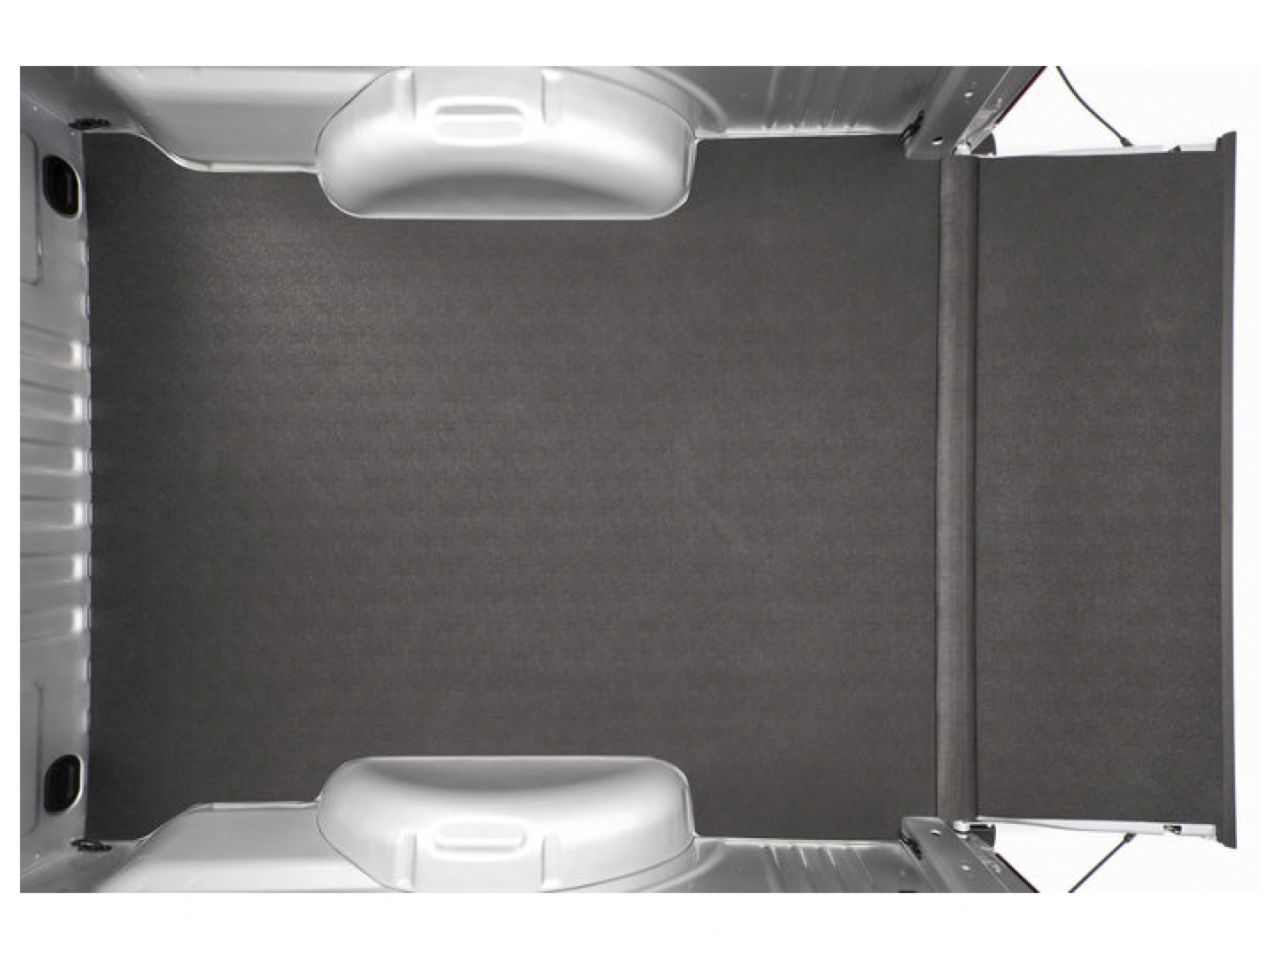 Bedrug Impact Mat For Spray-In Or No Bed Liner07-18 GM Silverado/Sierra5'8"